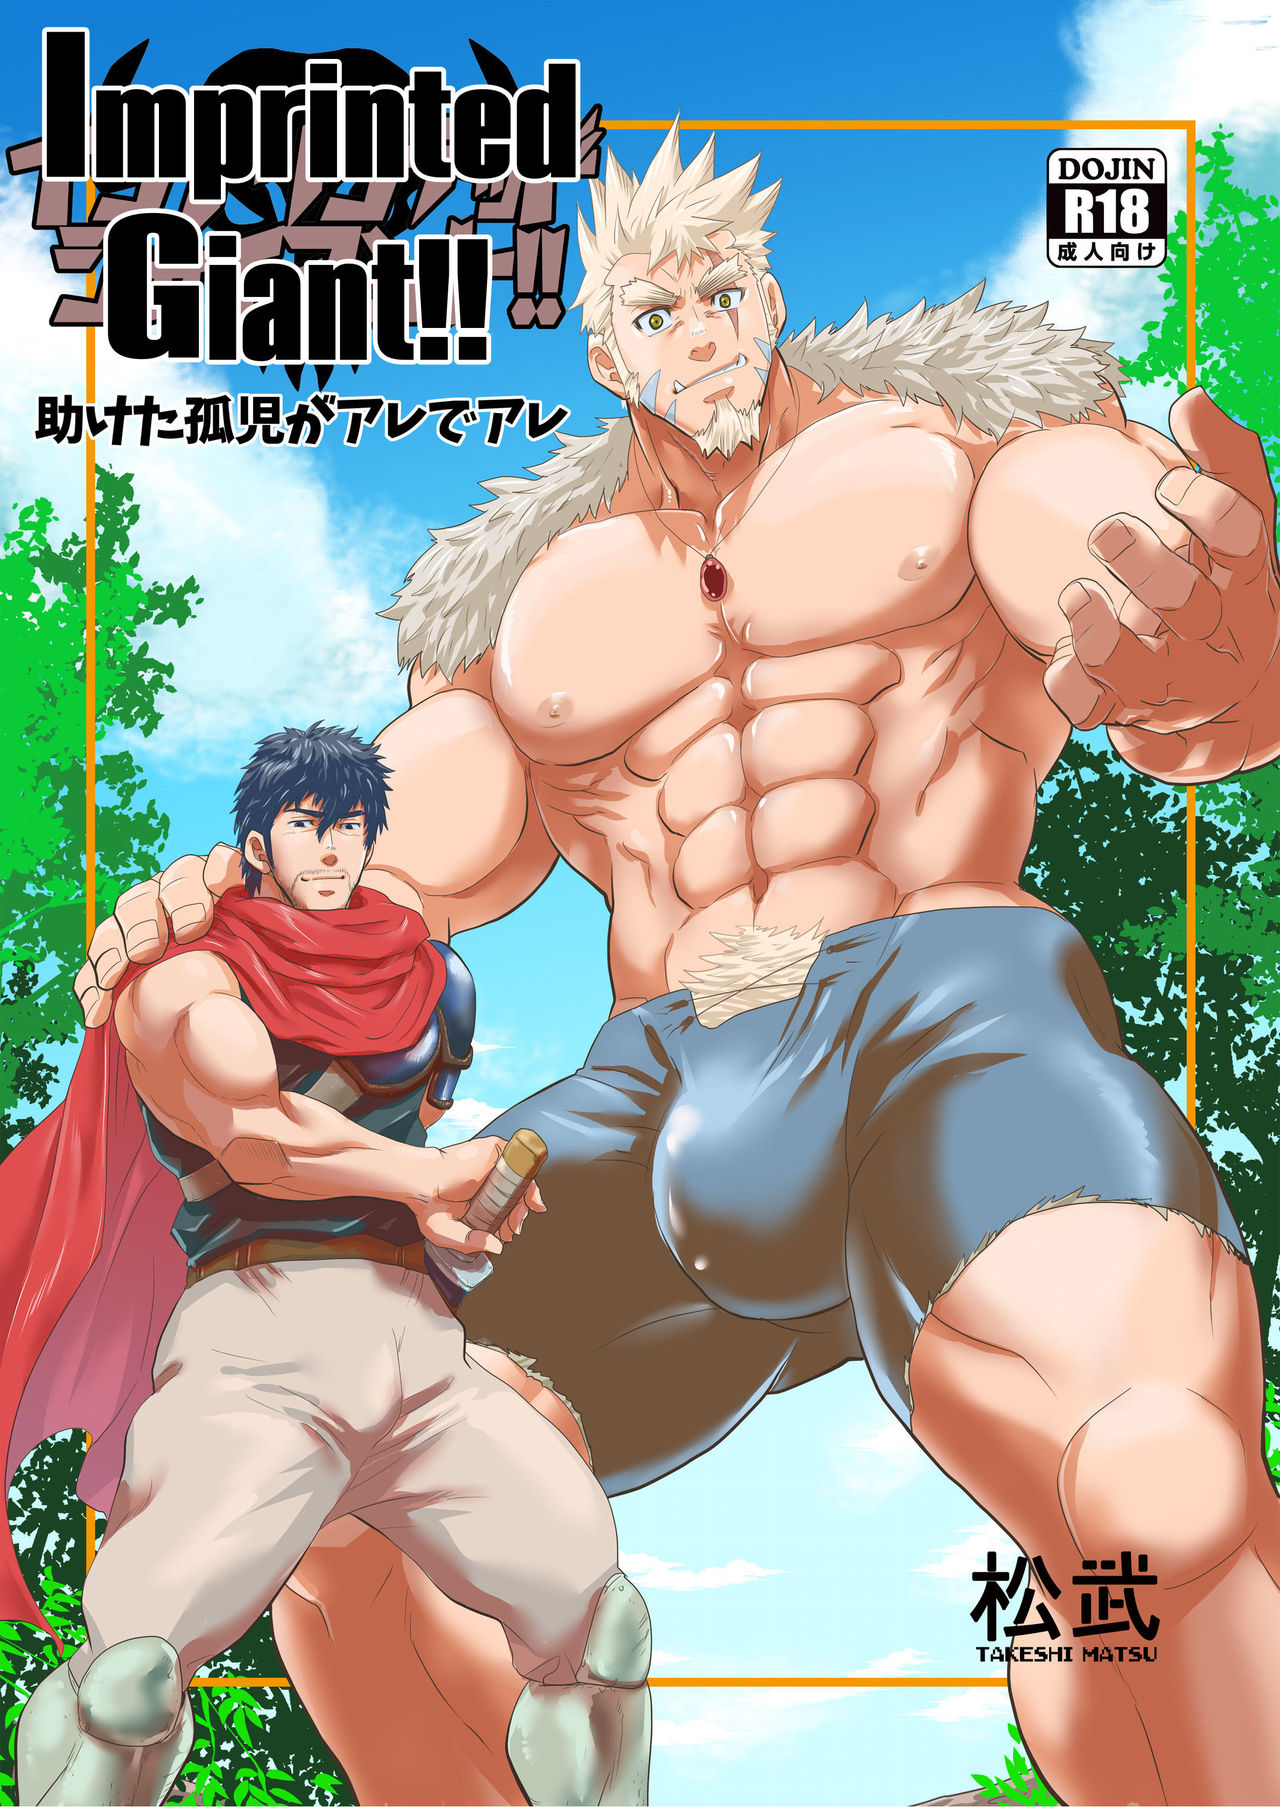 Imprinted Giant!! - Foto 1